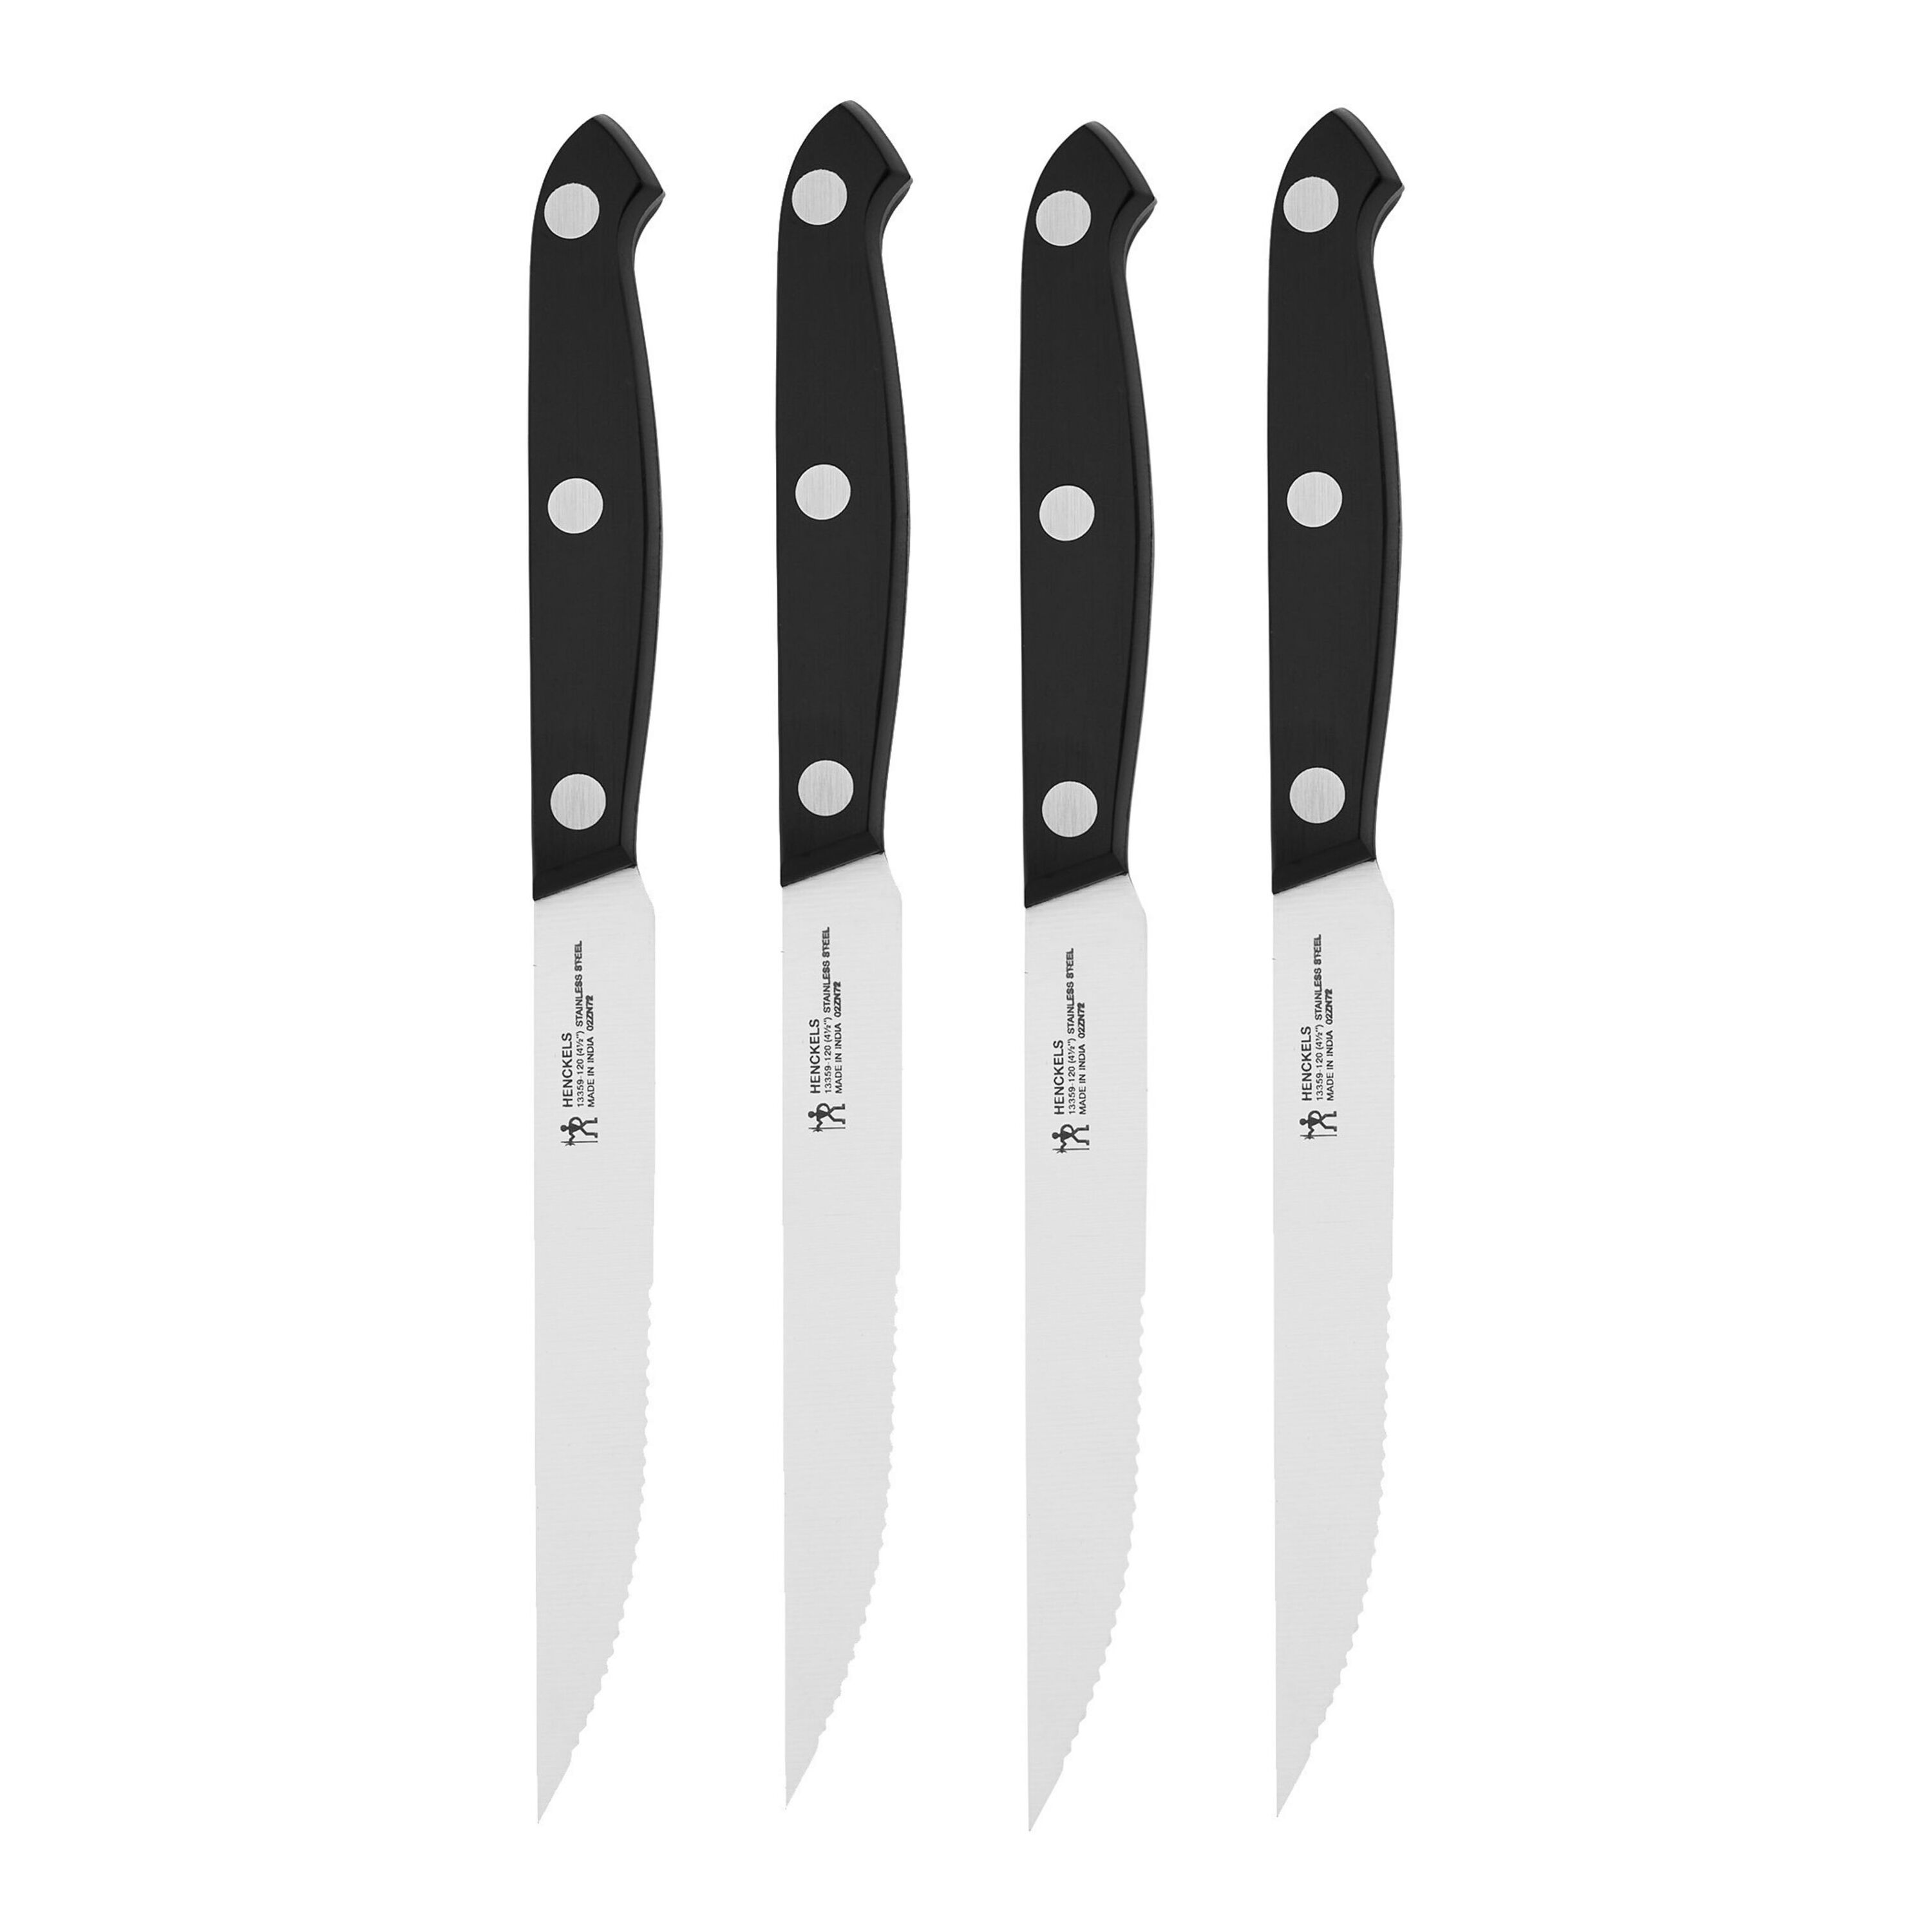 4 PCs 4 x 6 Boning/Steak Knife Set in a Gift Box, Black ABS